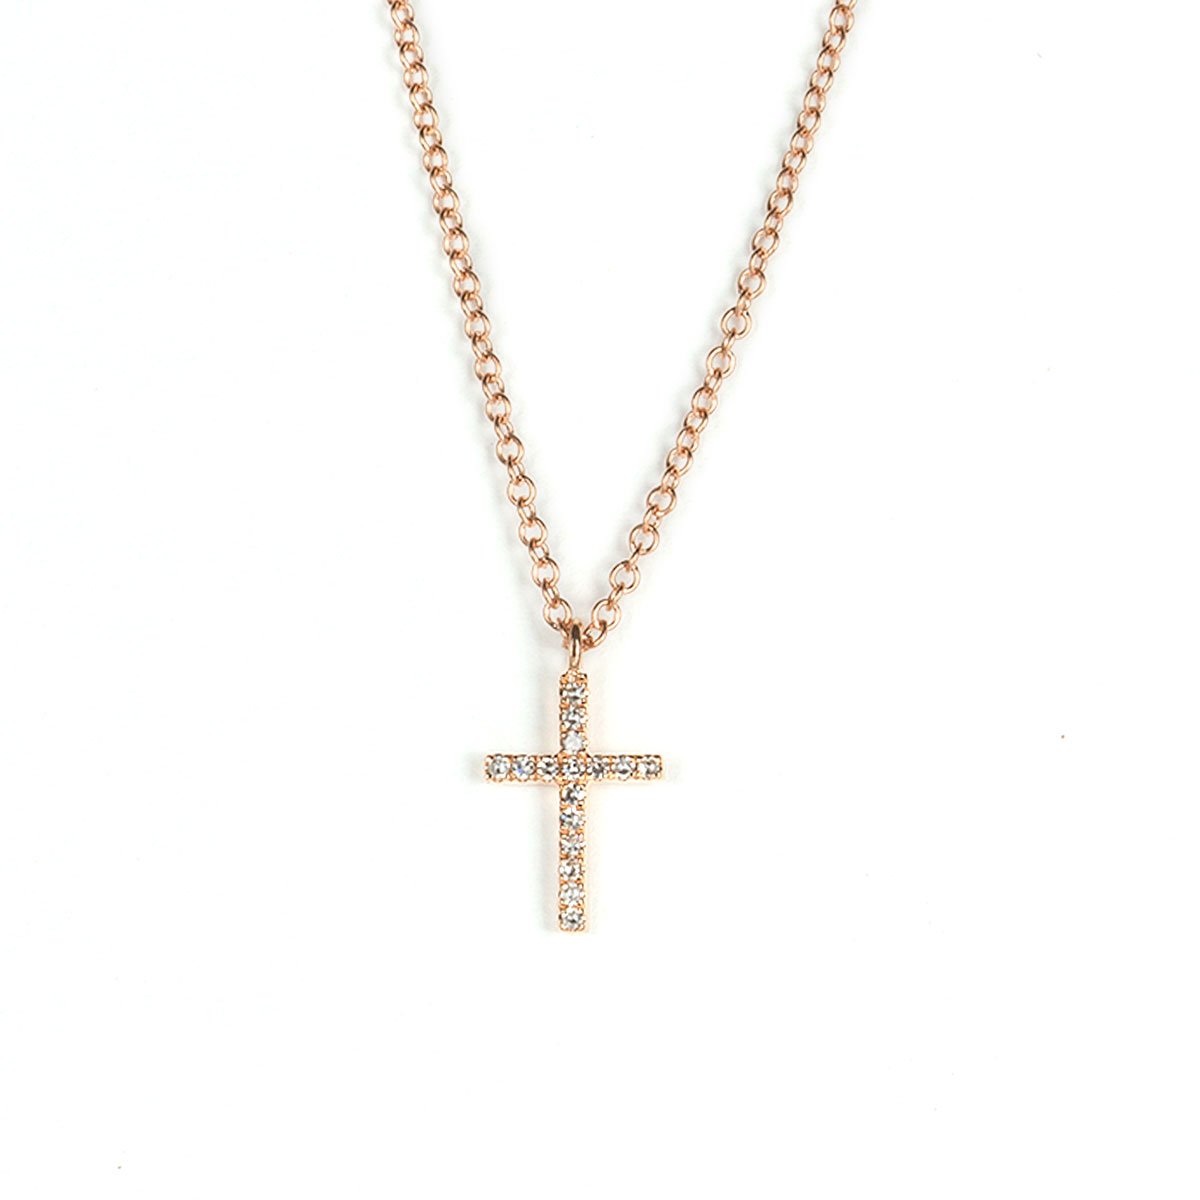 Petite Cross Necklace-Necklaces-Zofia Day Co.